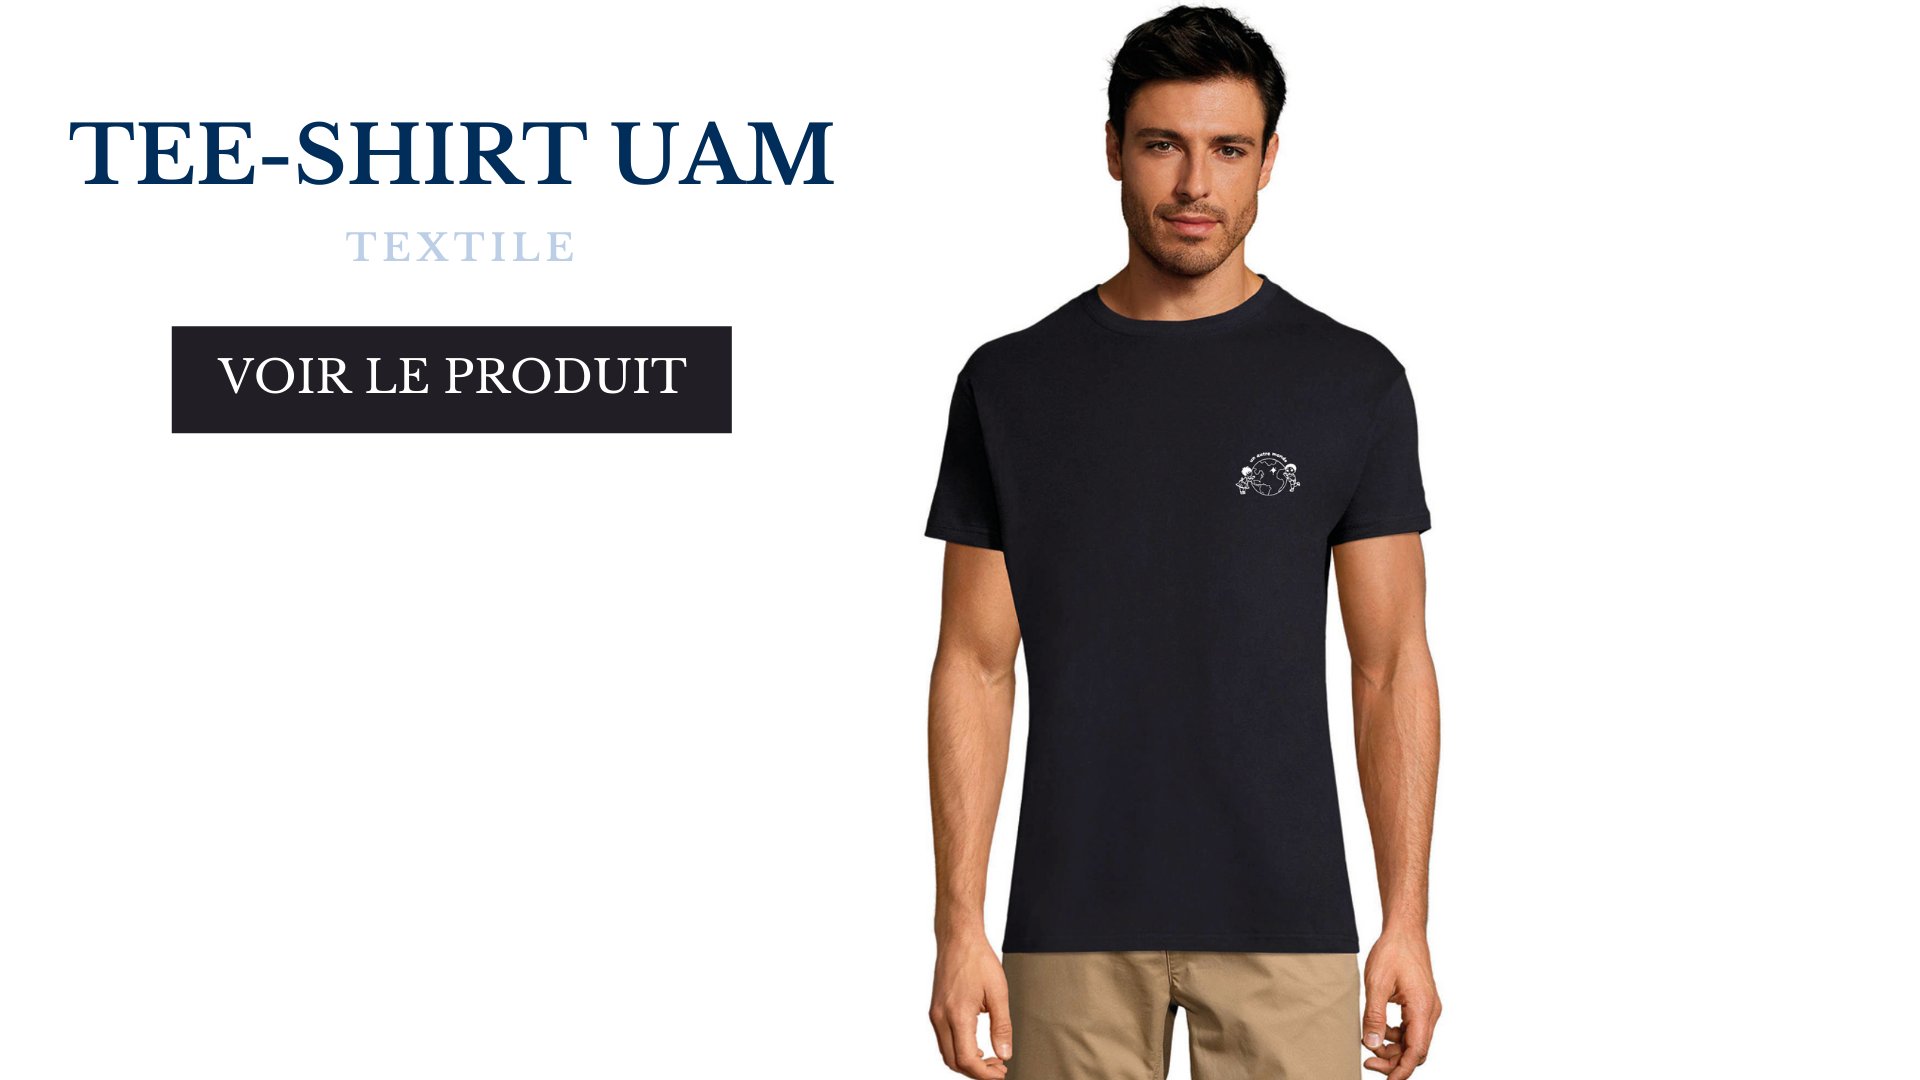 Tee-shirt UAM